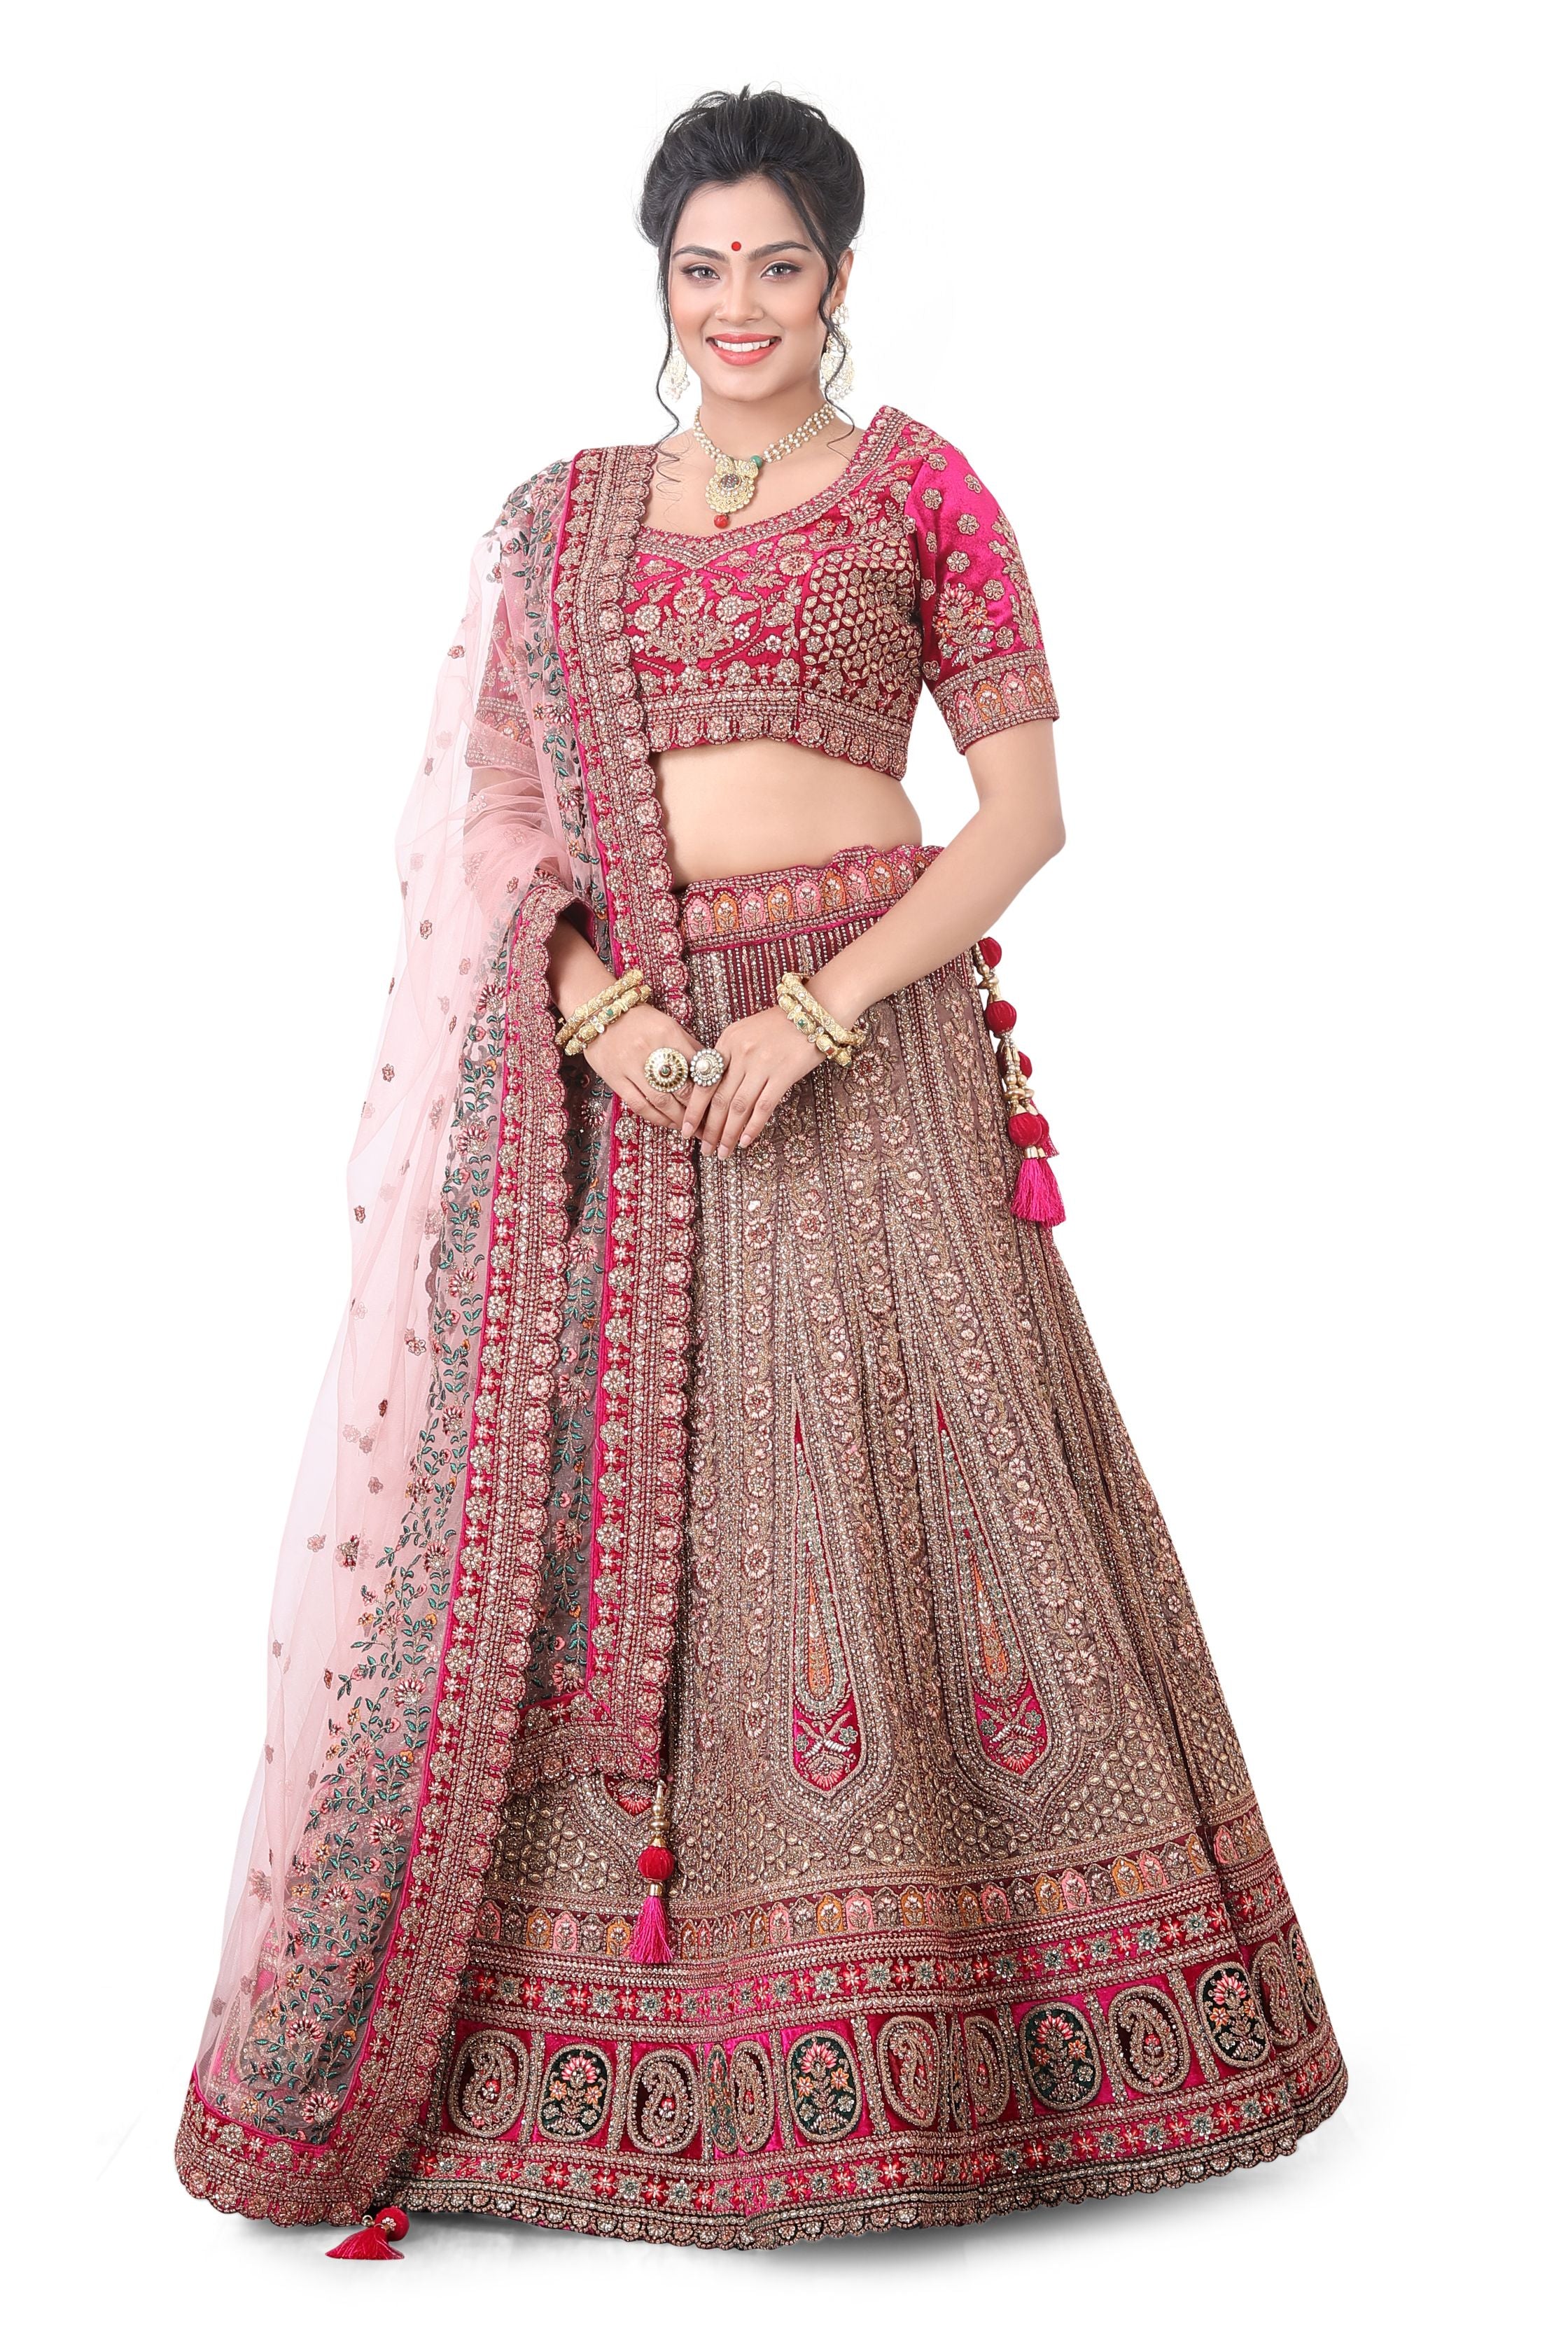 Gold-Pink Bridal Lehenga Choli - Premium Bridal lehenga from Dulhan Exclusives - Just $2950! Shop now at Dulhan Exclusives